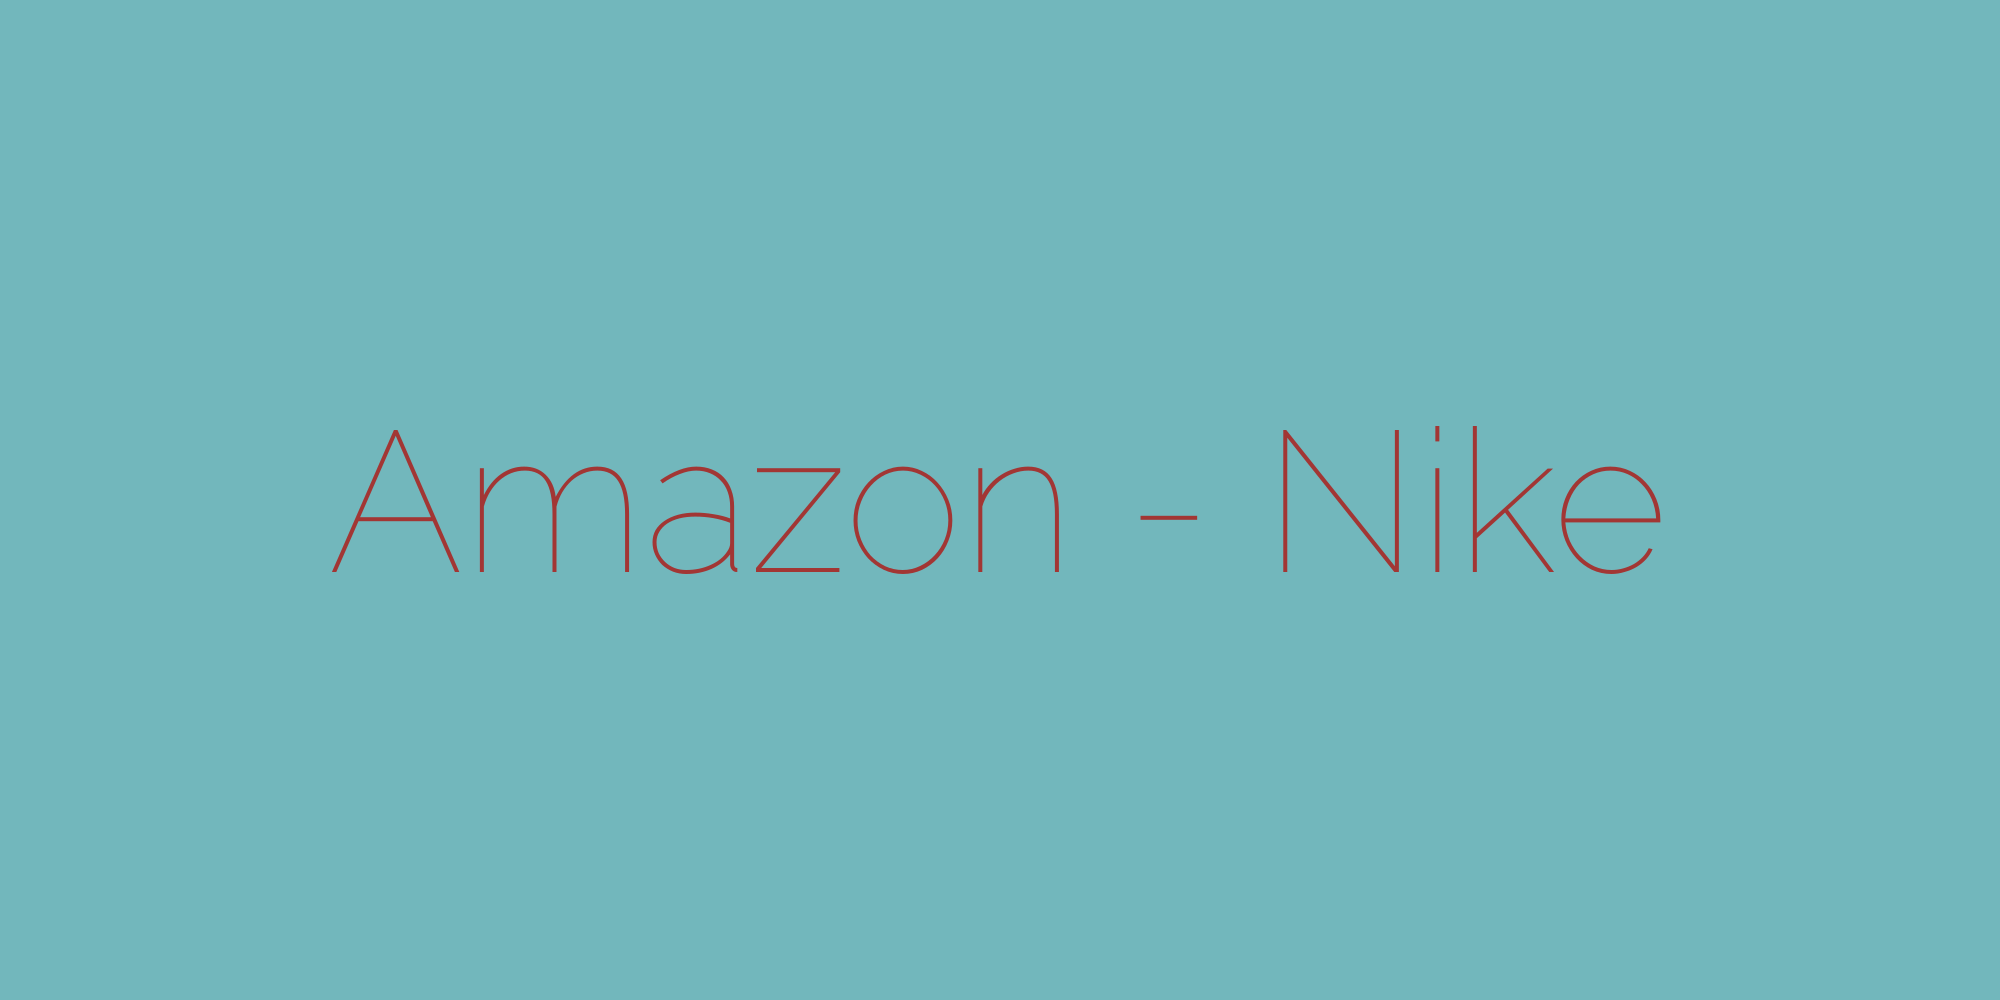 Amazon i Nike